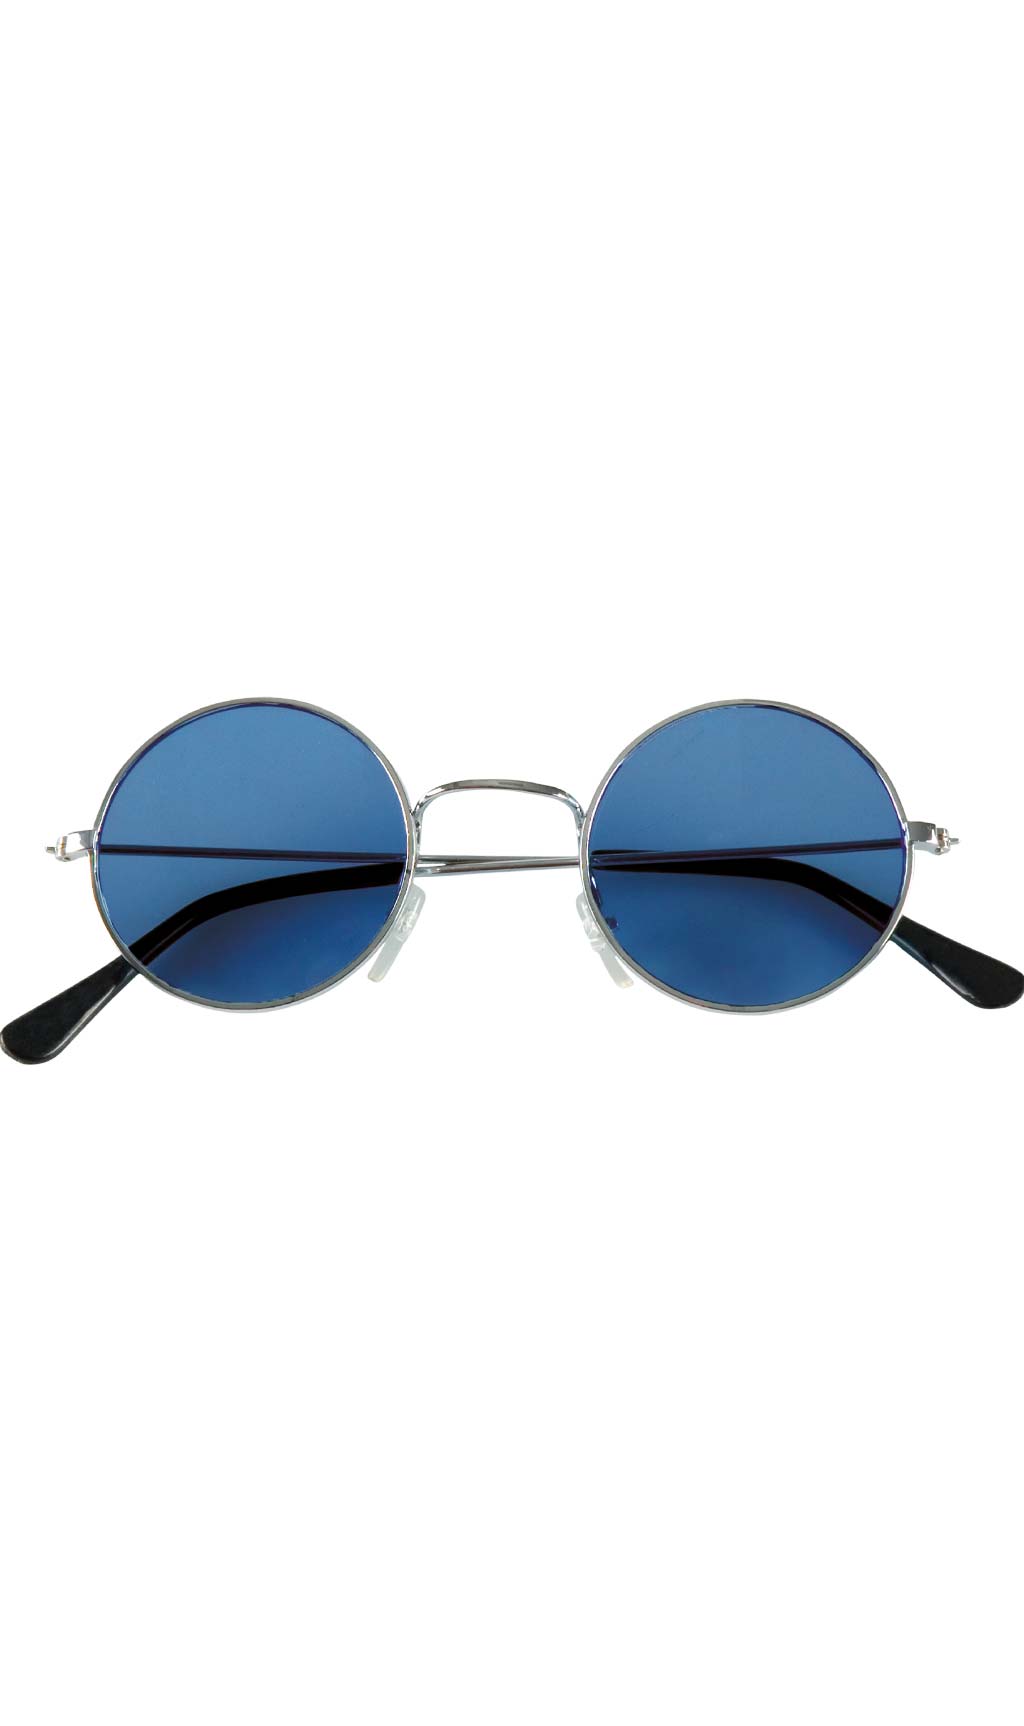 Runde Brille Blau